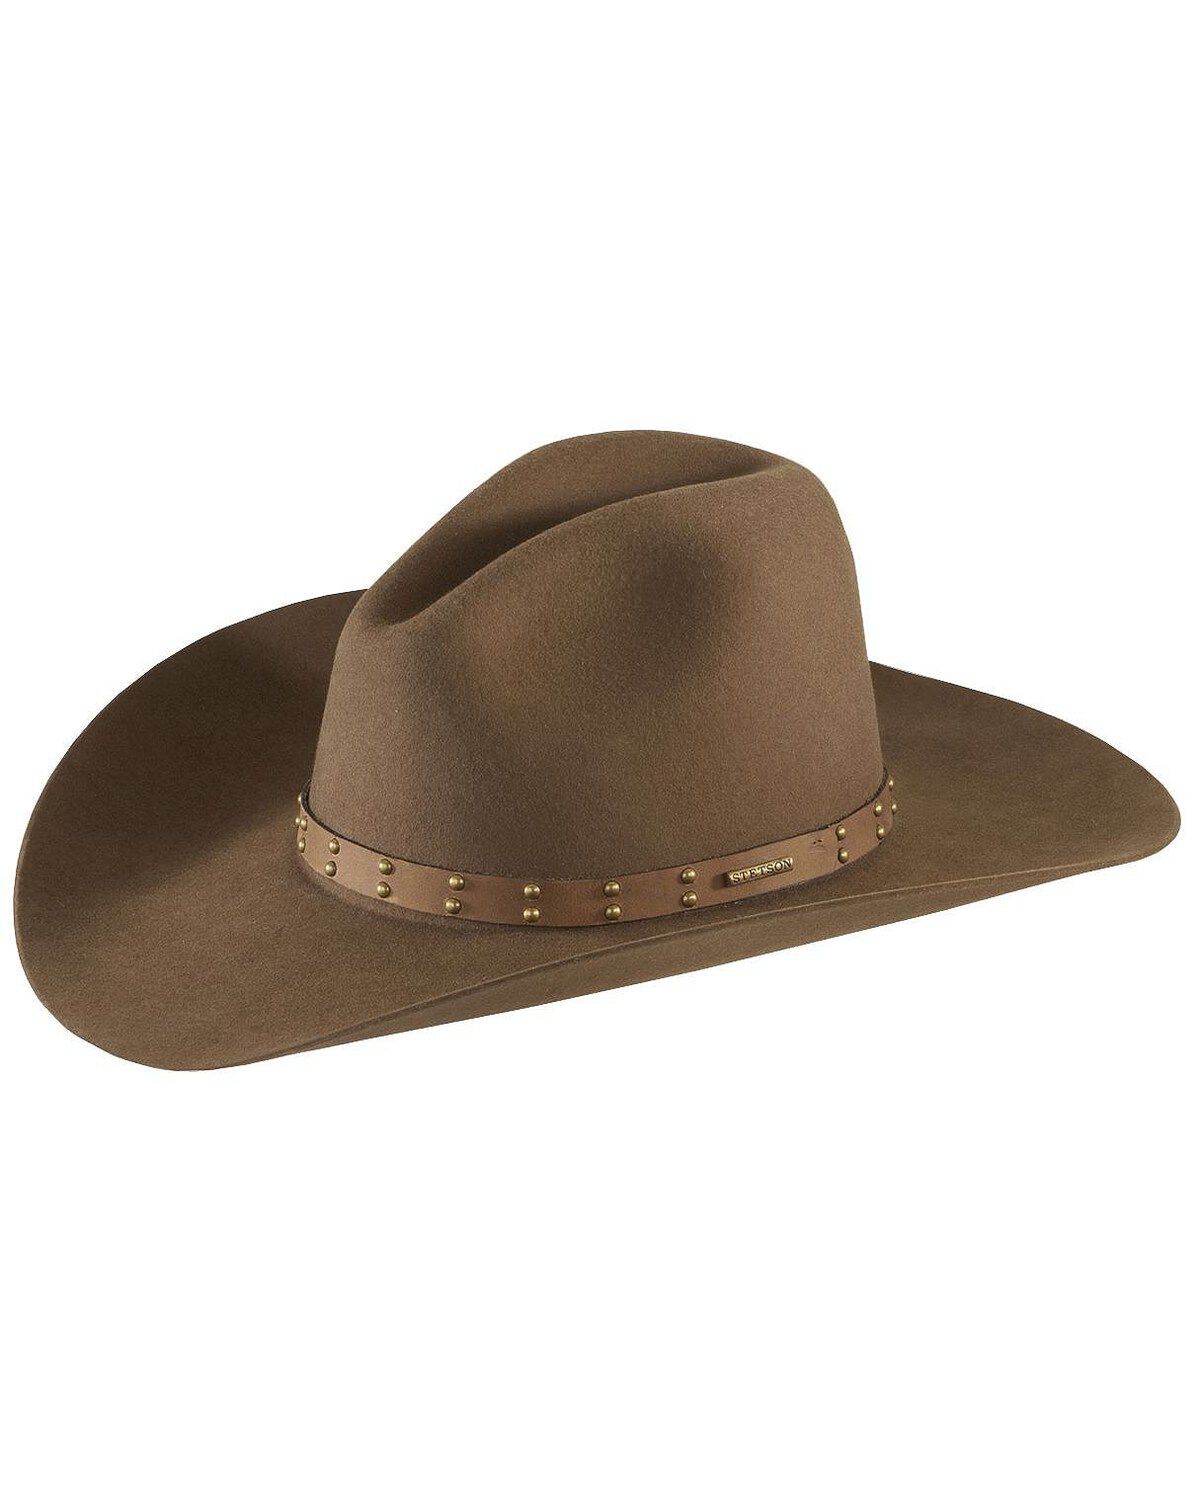 Cowboy Hat Mens Stetson Cowboy Leather Cowboy Man Texas Hats Sand White Brown 